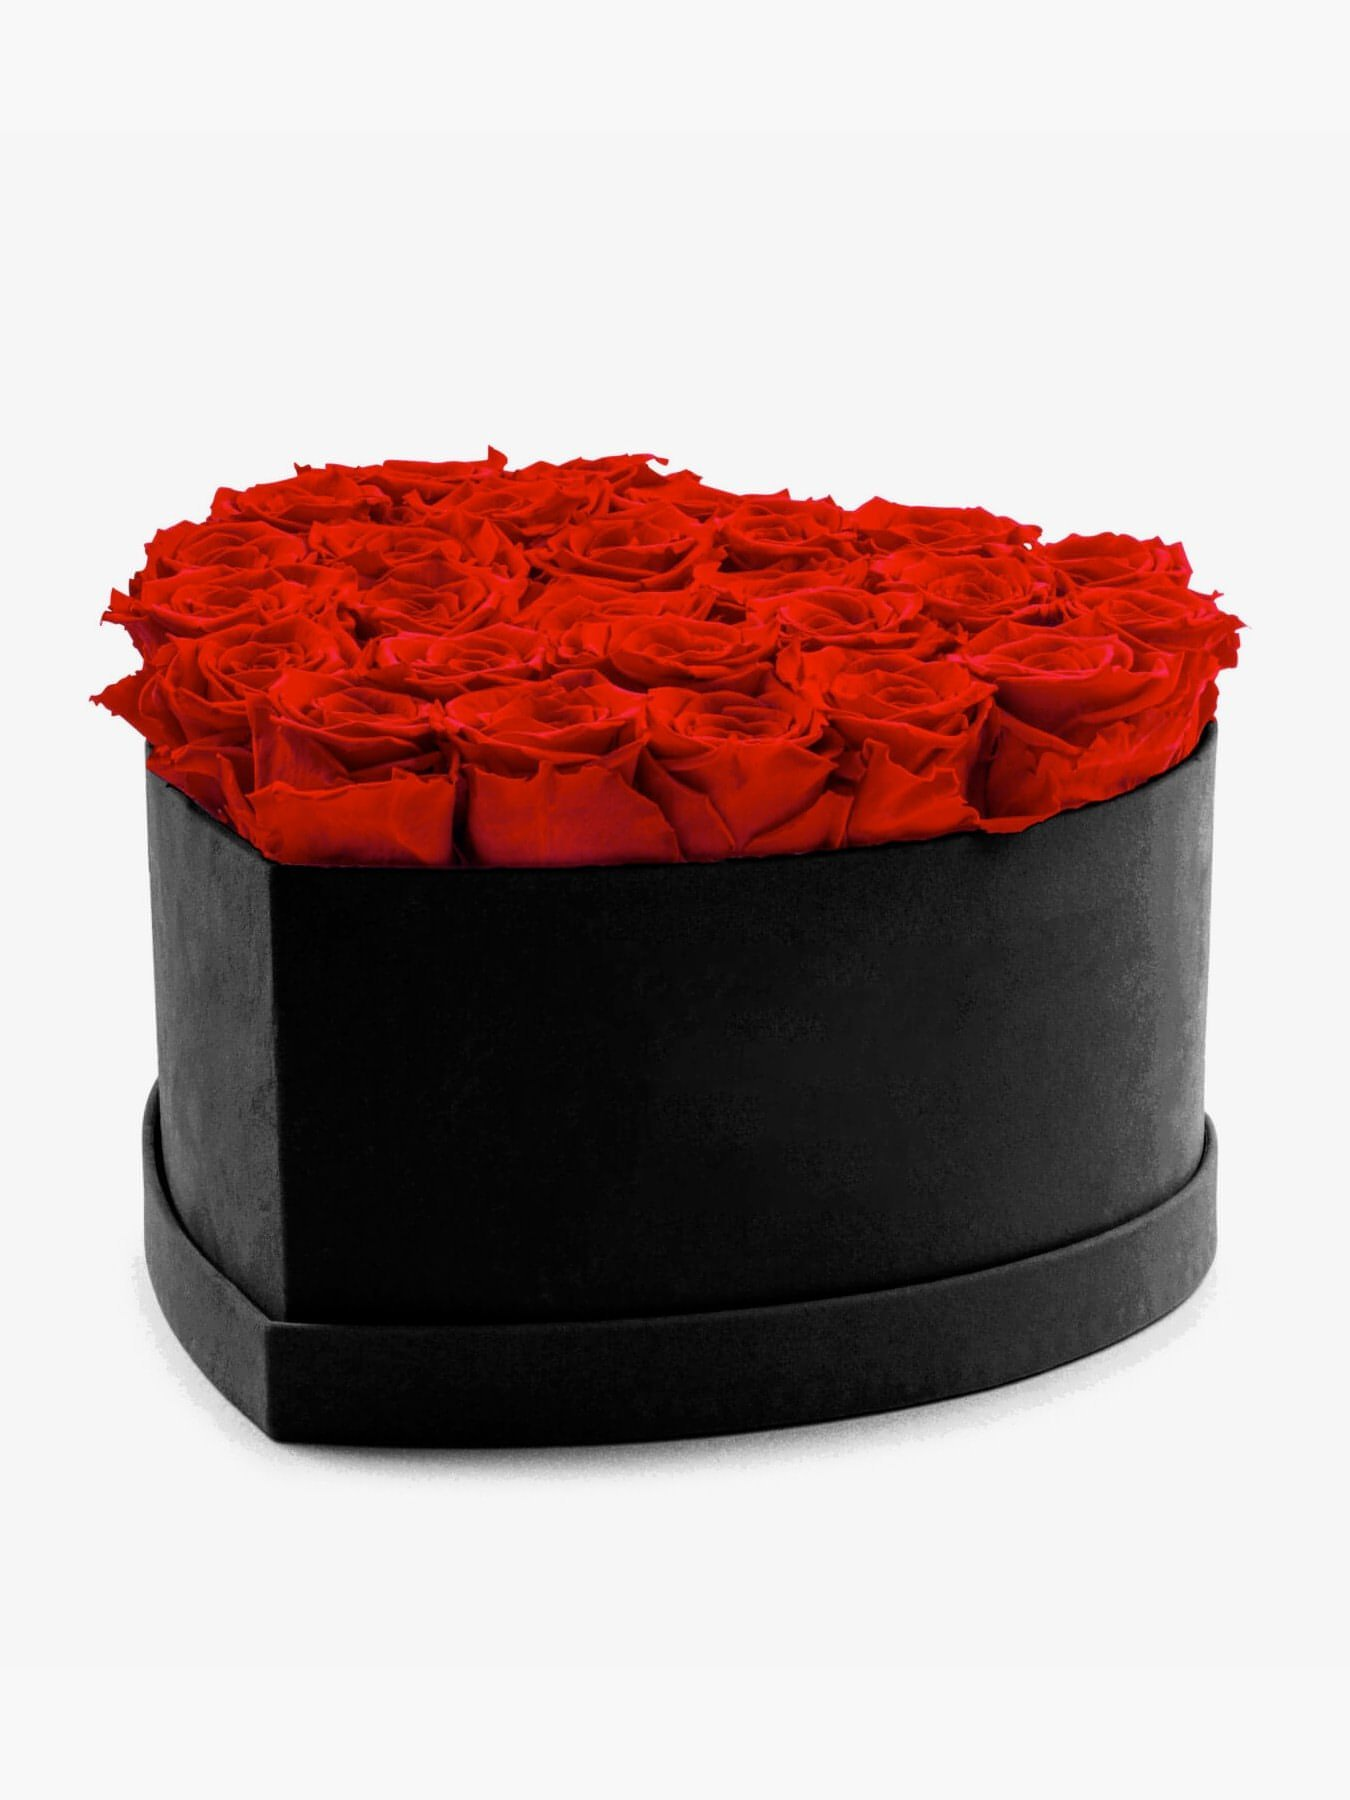 Red Roses in Black Heart Box - CherryBlossomDubai.ae